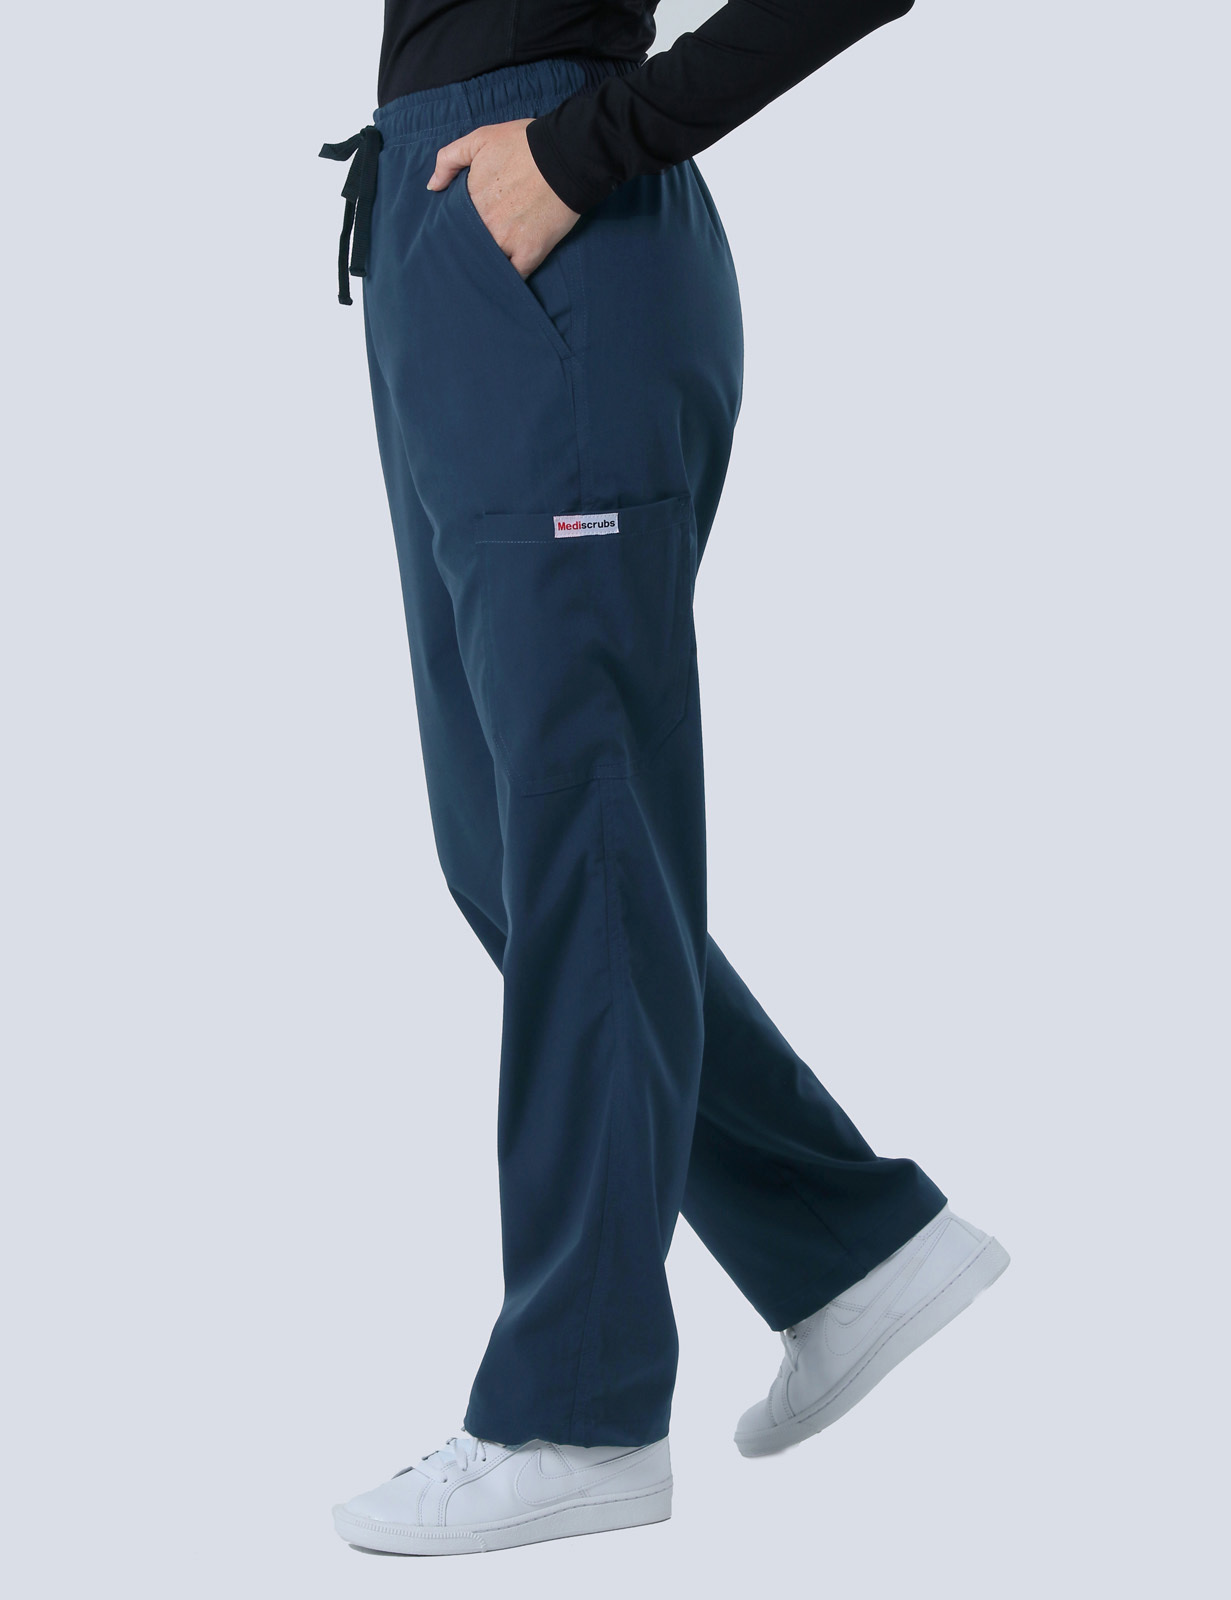 Monash Health - Women's Doctor (4 Pocket Scrub Top and Cargo Pants in Navy incl Logos)